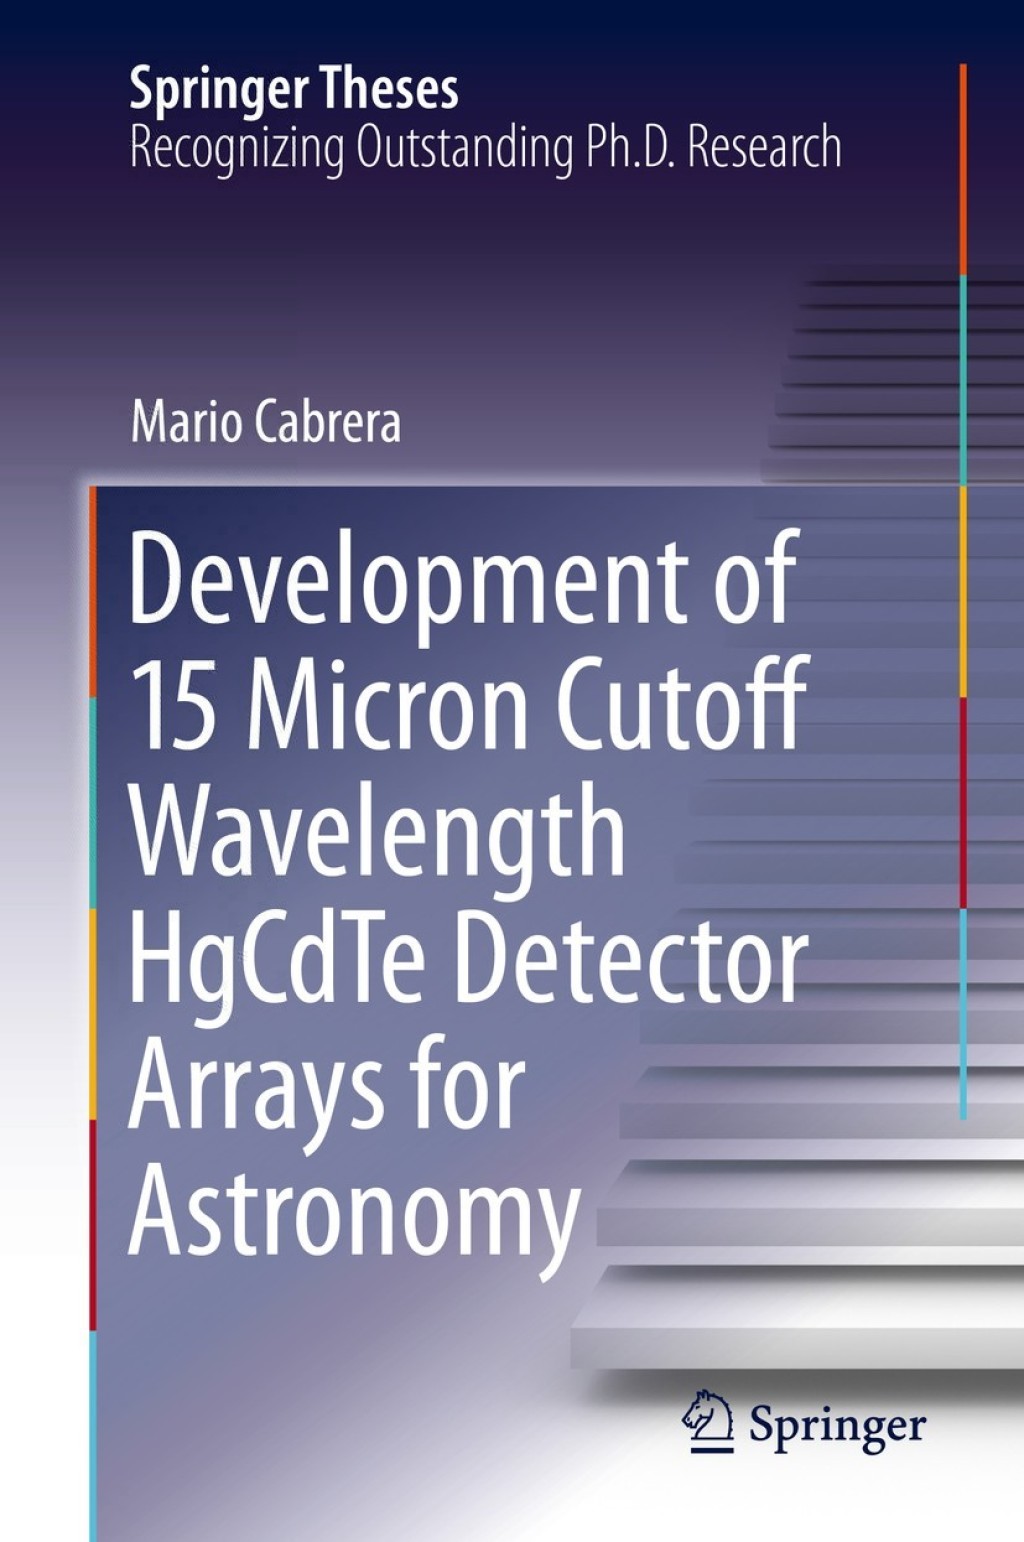 Reflowable Development of 15 Micron Cutoff Wavelength HgCdTe Detector Arrays for Astronomy